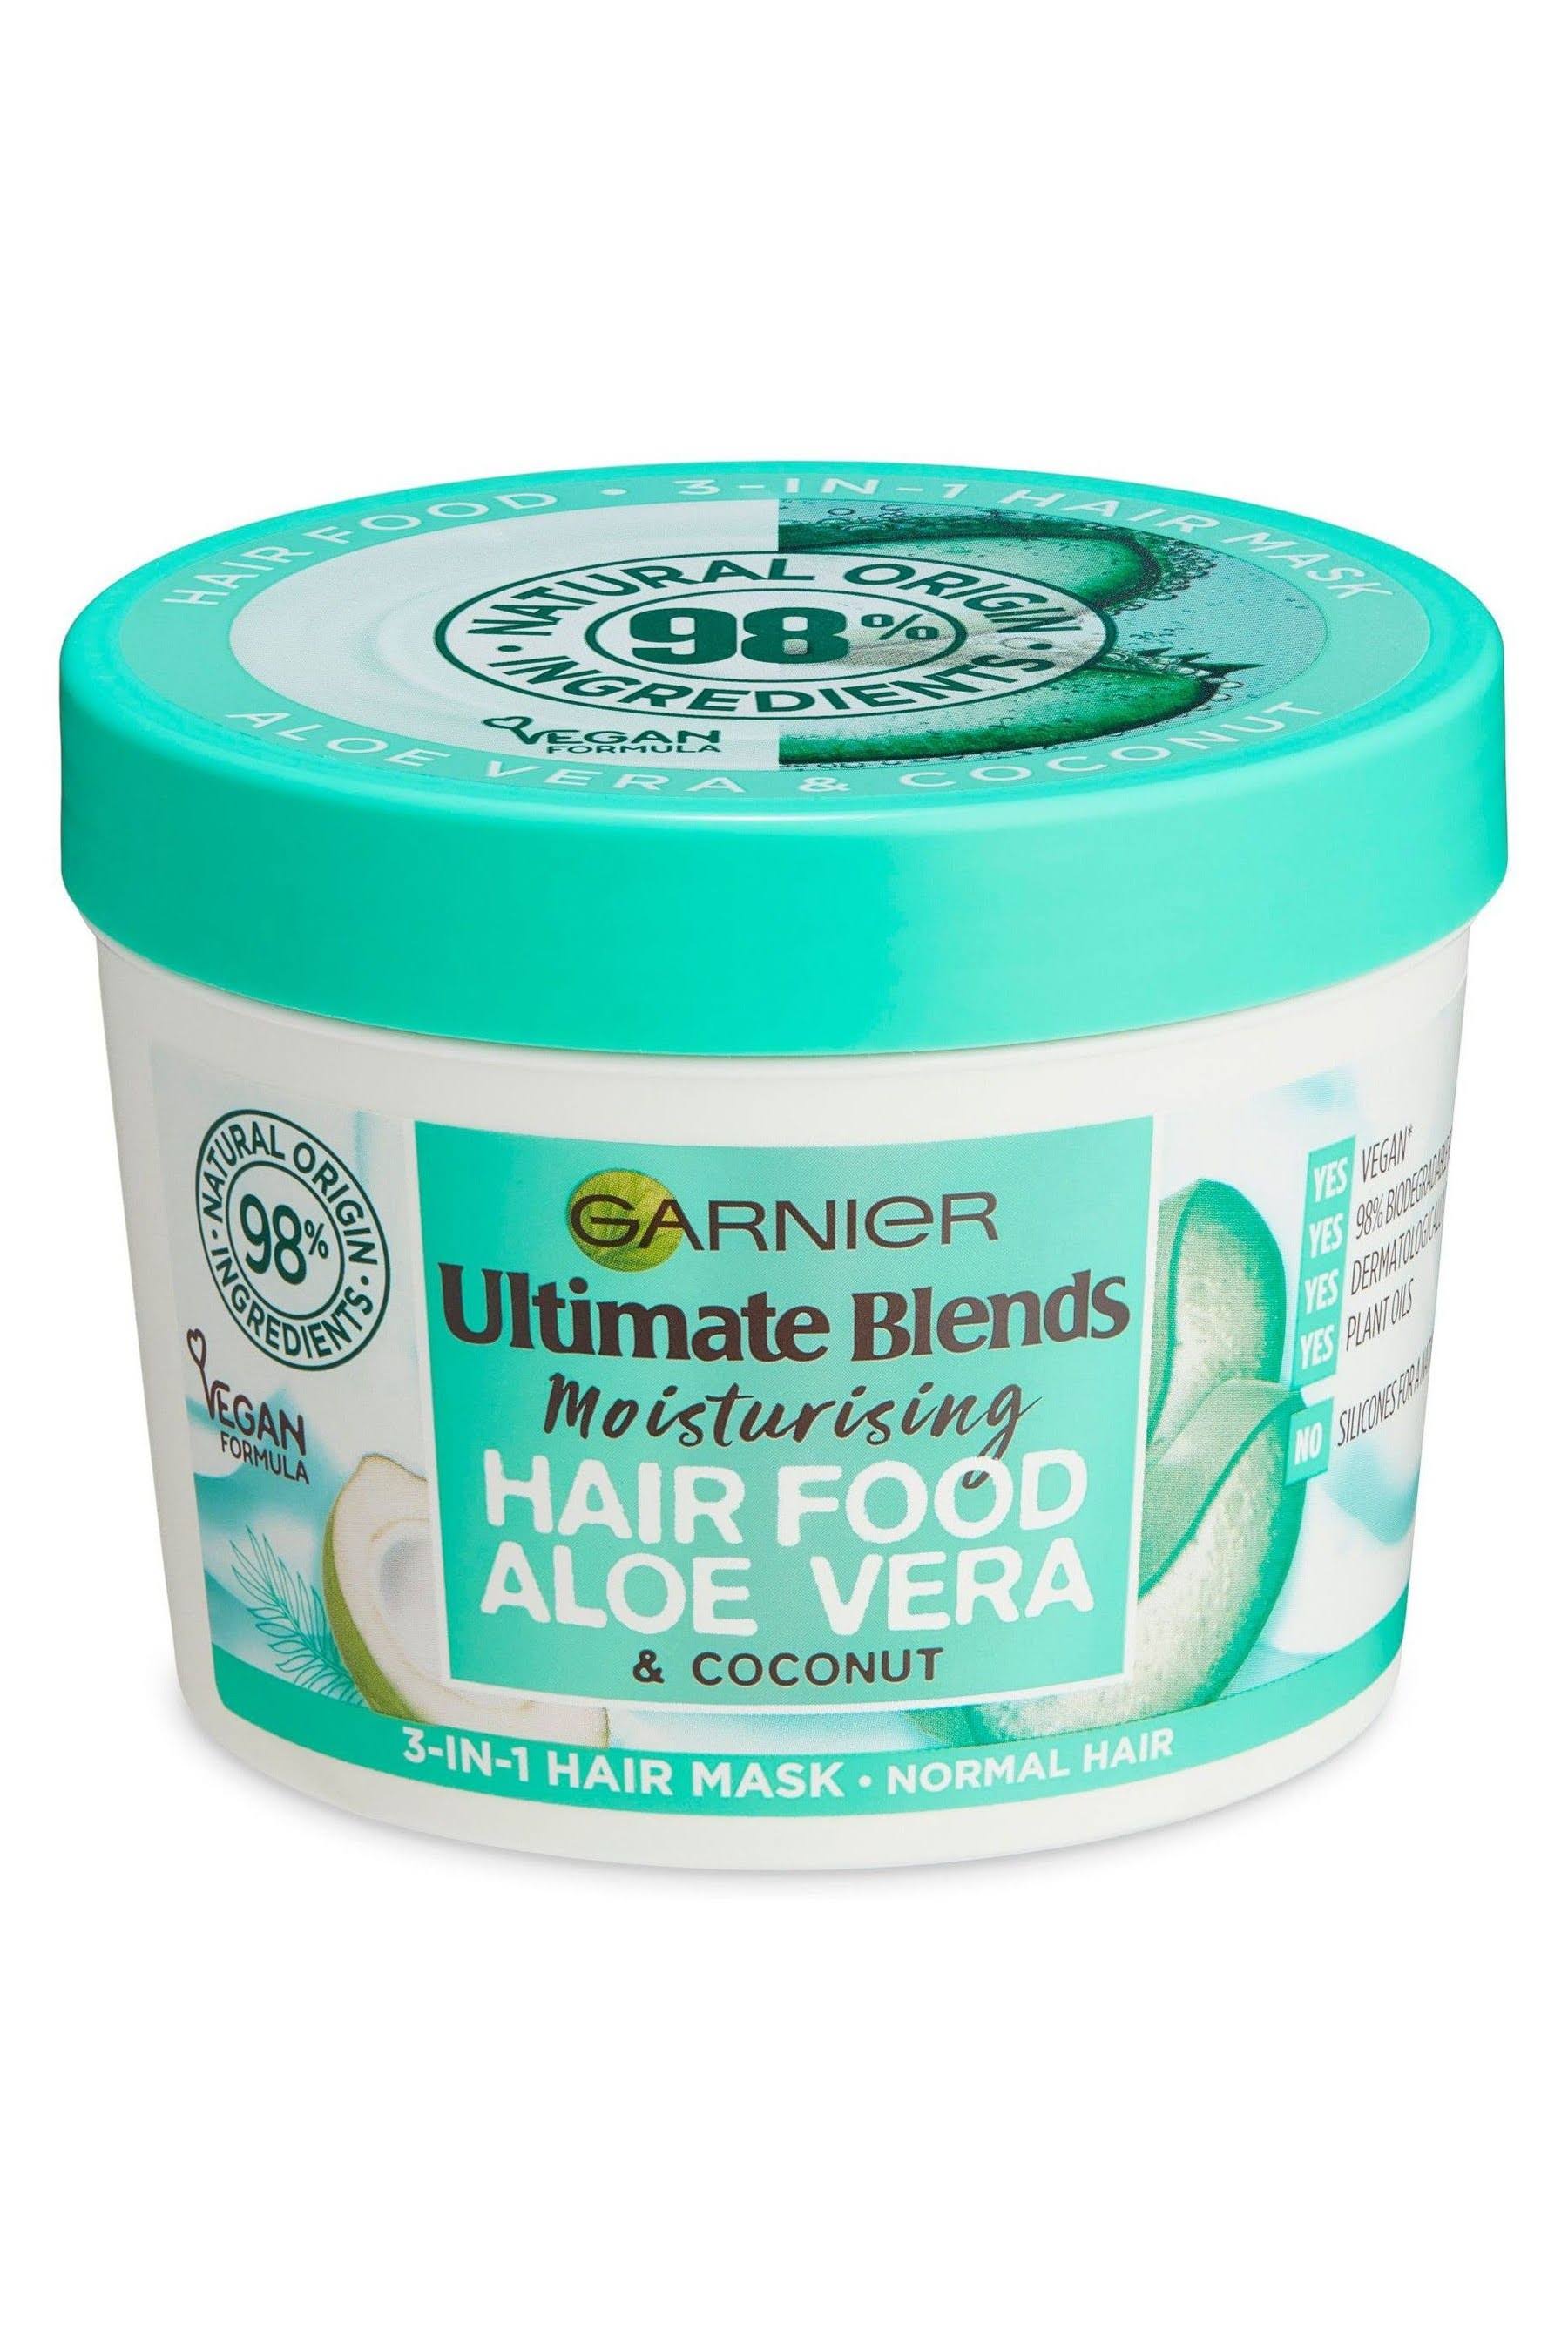 Garnier Ultimate Blends Hair Food 3-in-1 Normal Hair Mask Treatment - Aloe Vera, 390ml